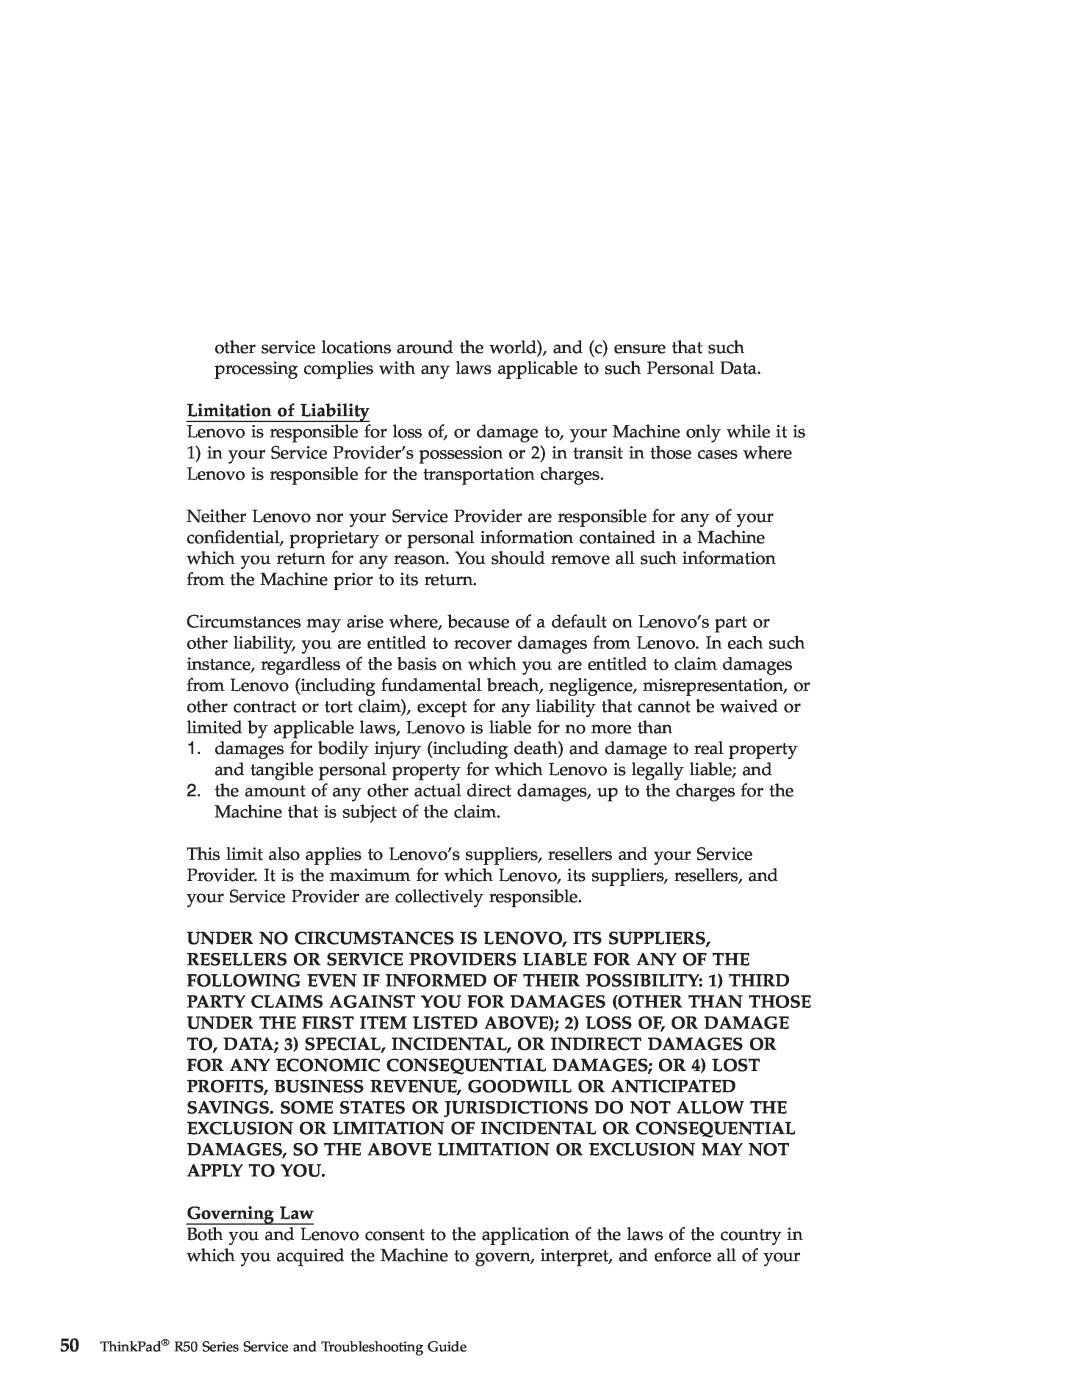 Lenovo R50 manual Limitation of Liability, Governing Law 